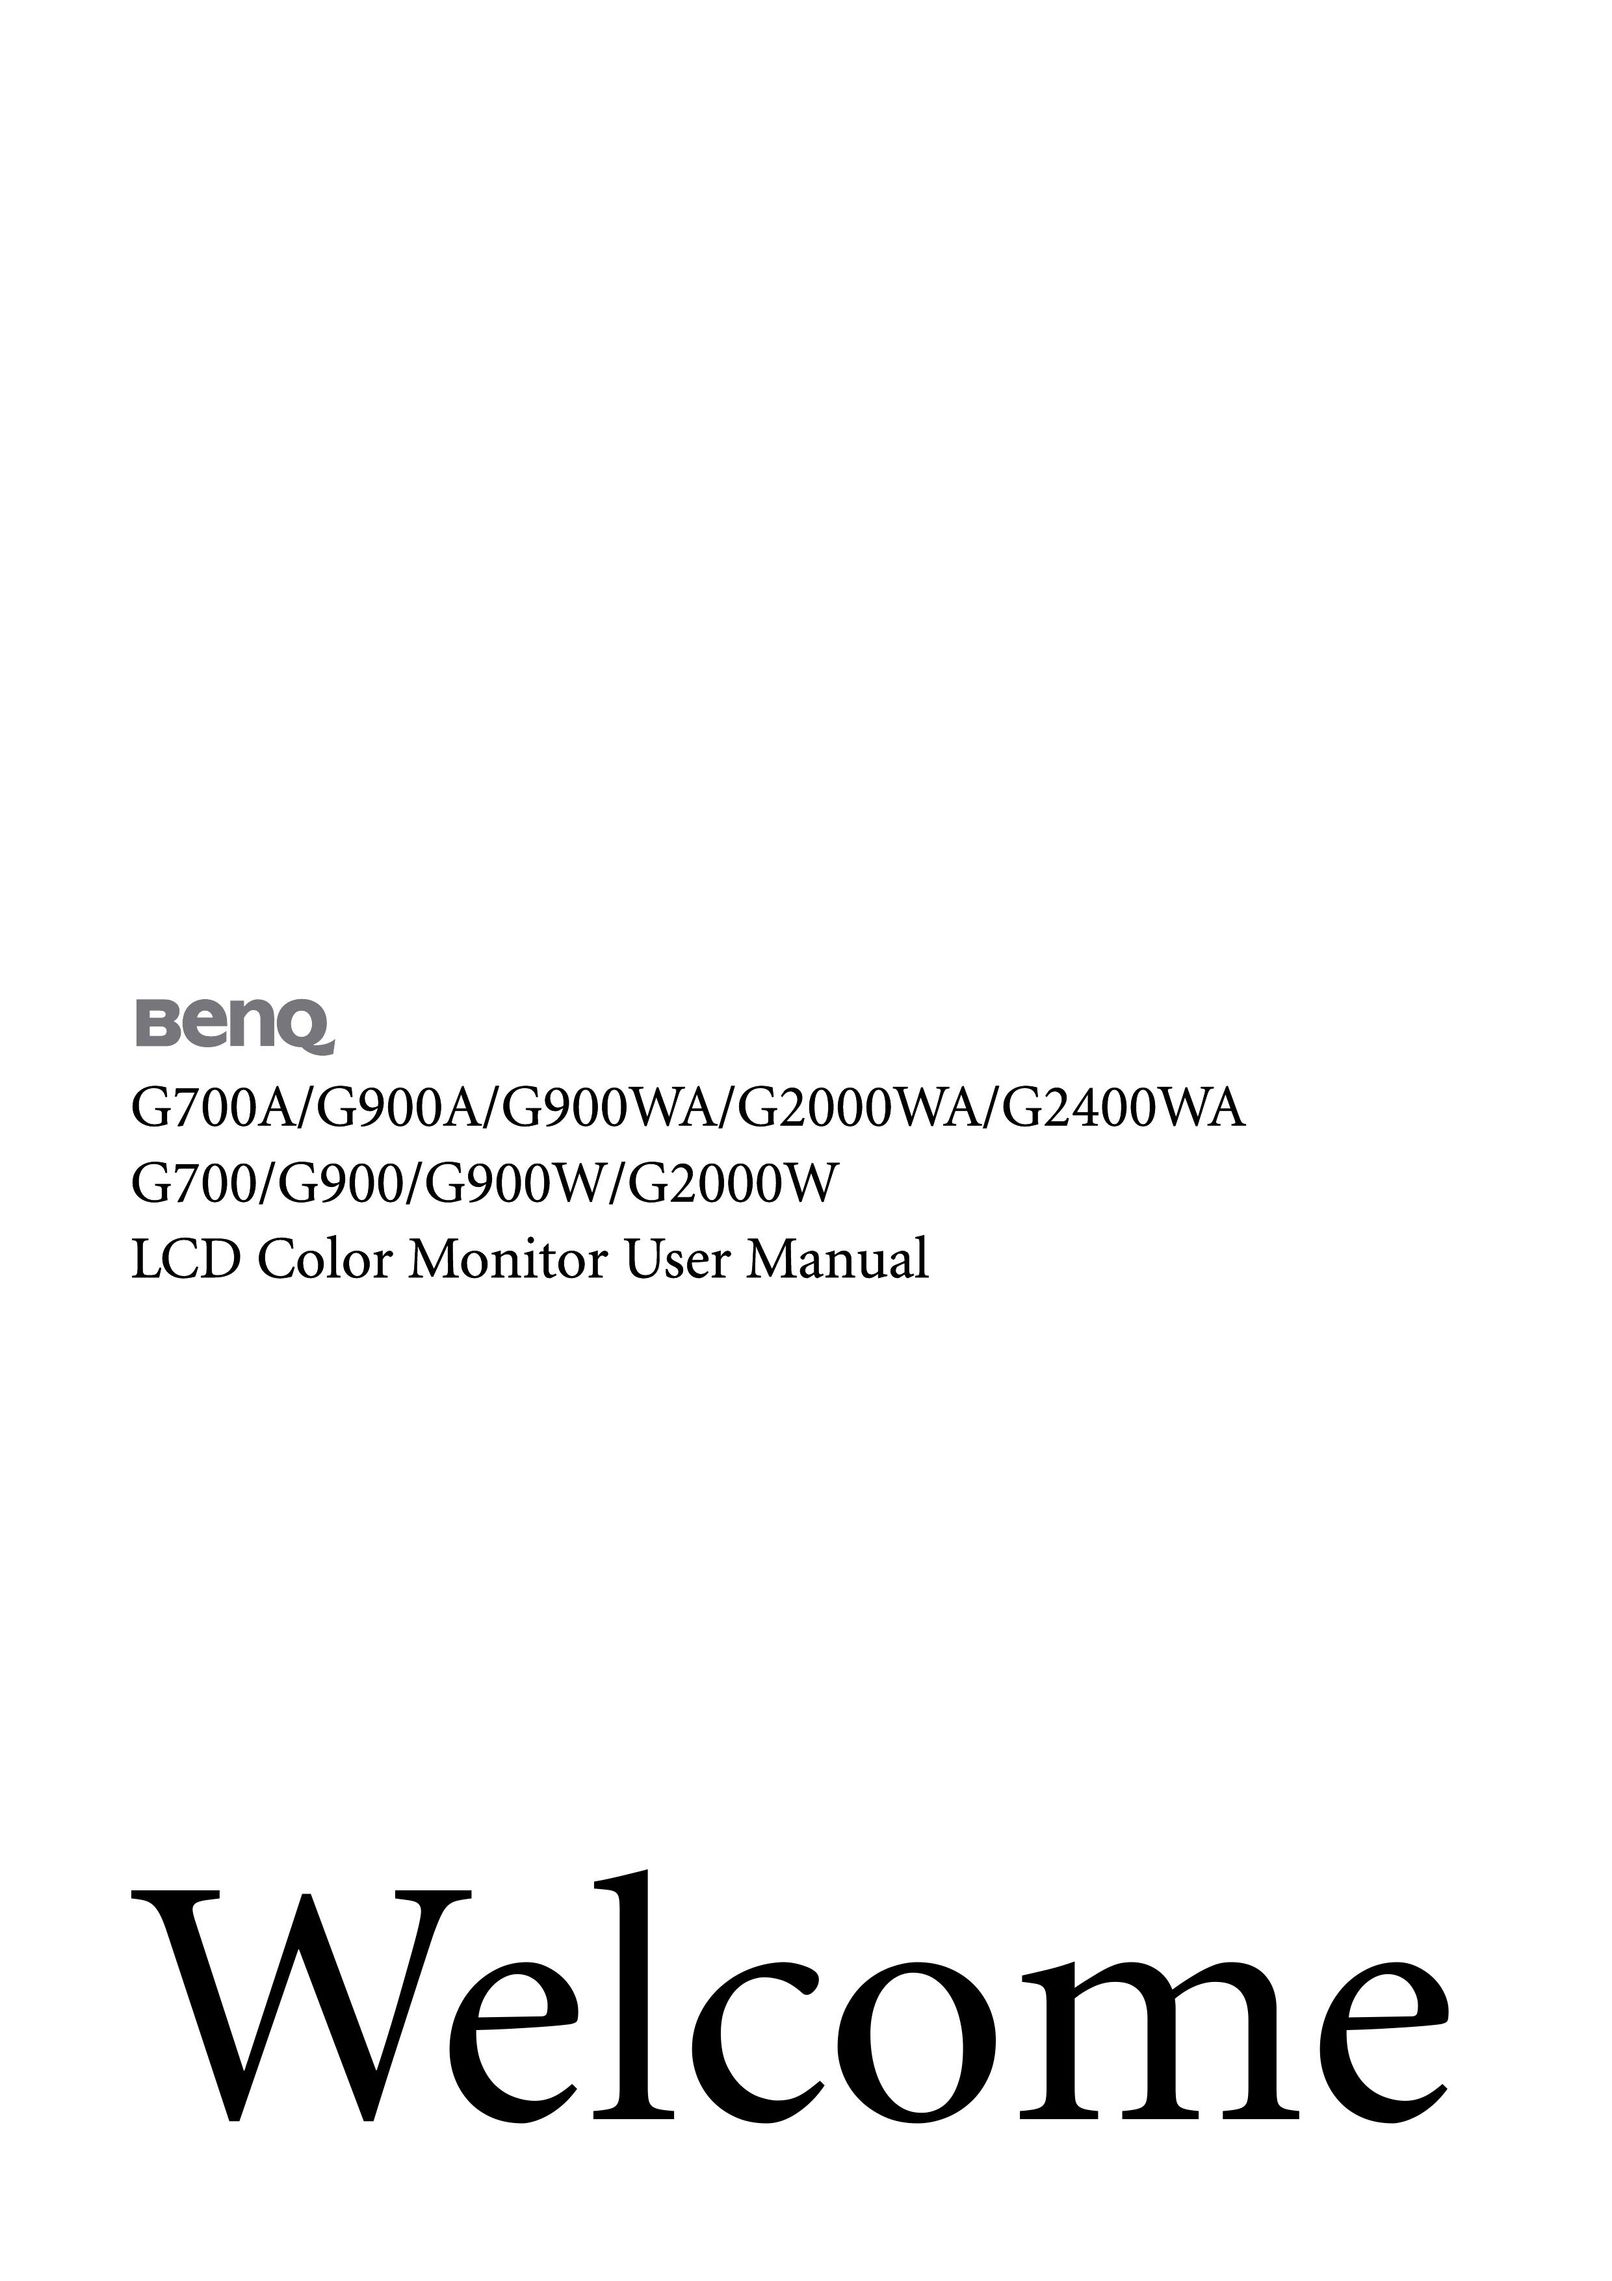 BenQ G2000WA Computer Monitor User Manual